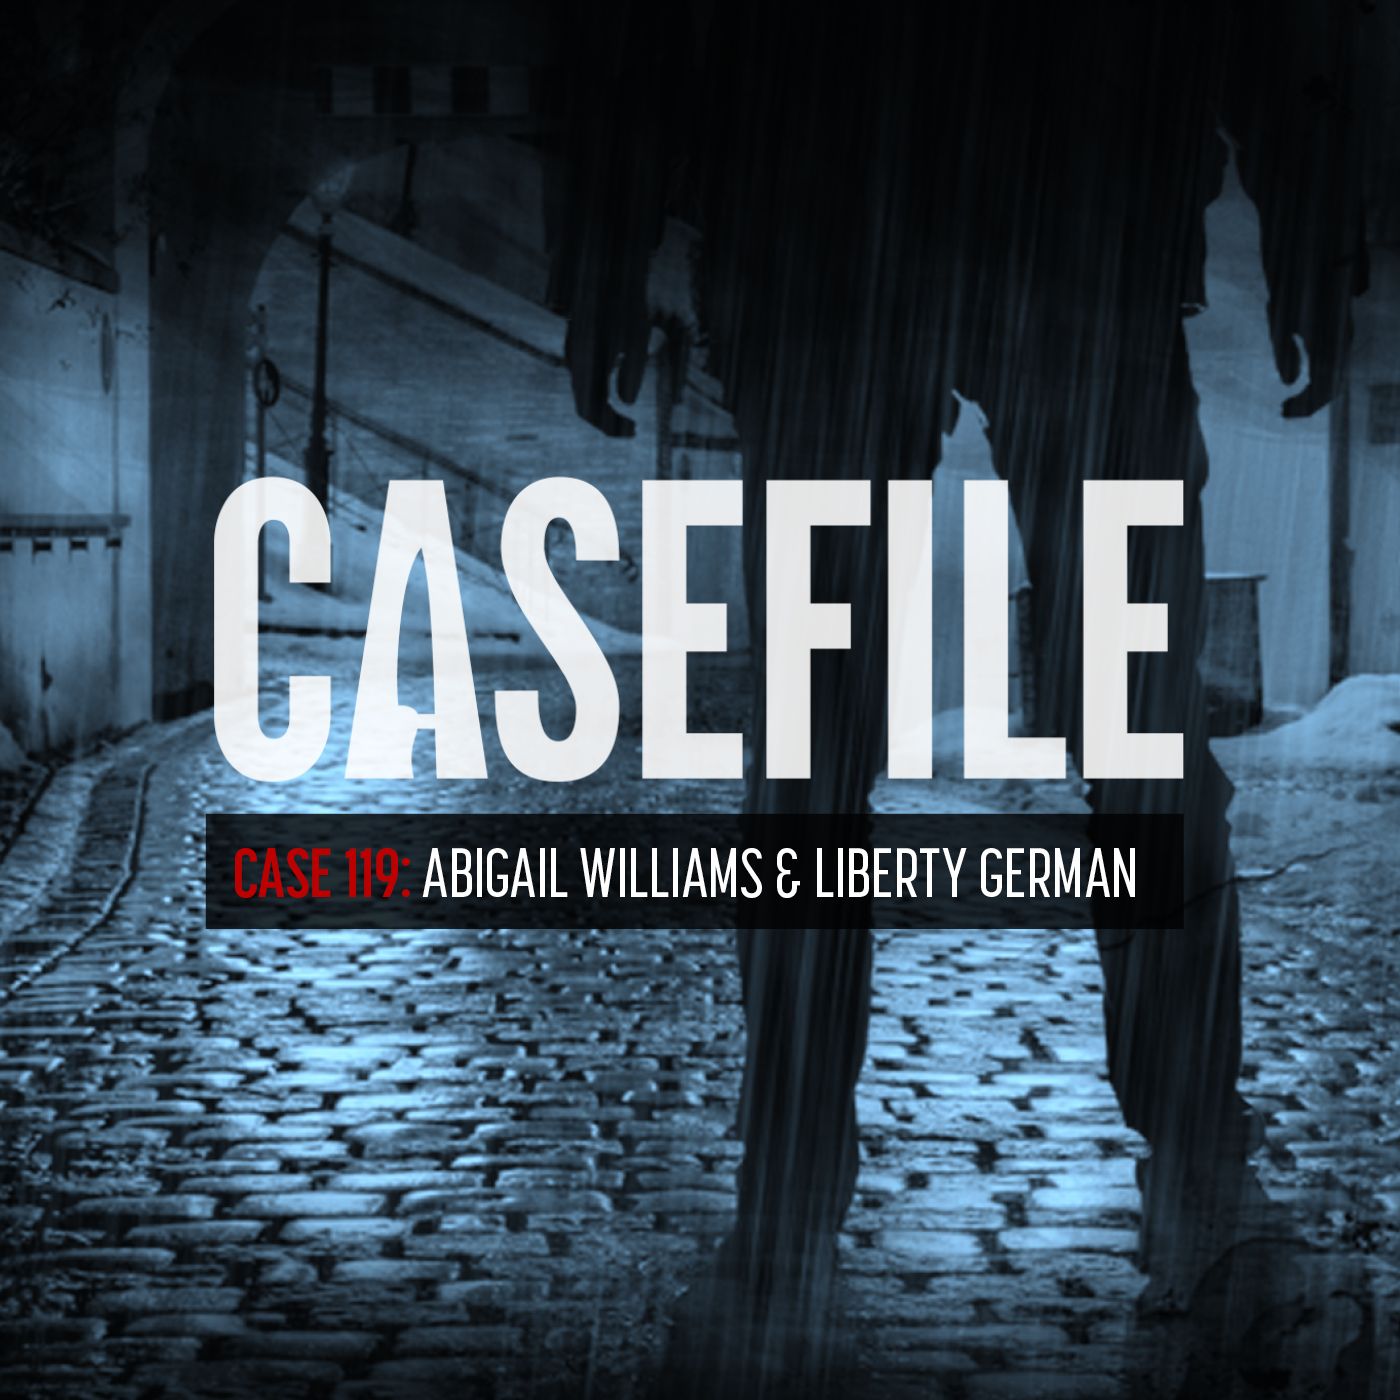 Case 119: Abigail Williams & Liberty German